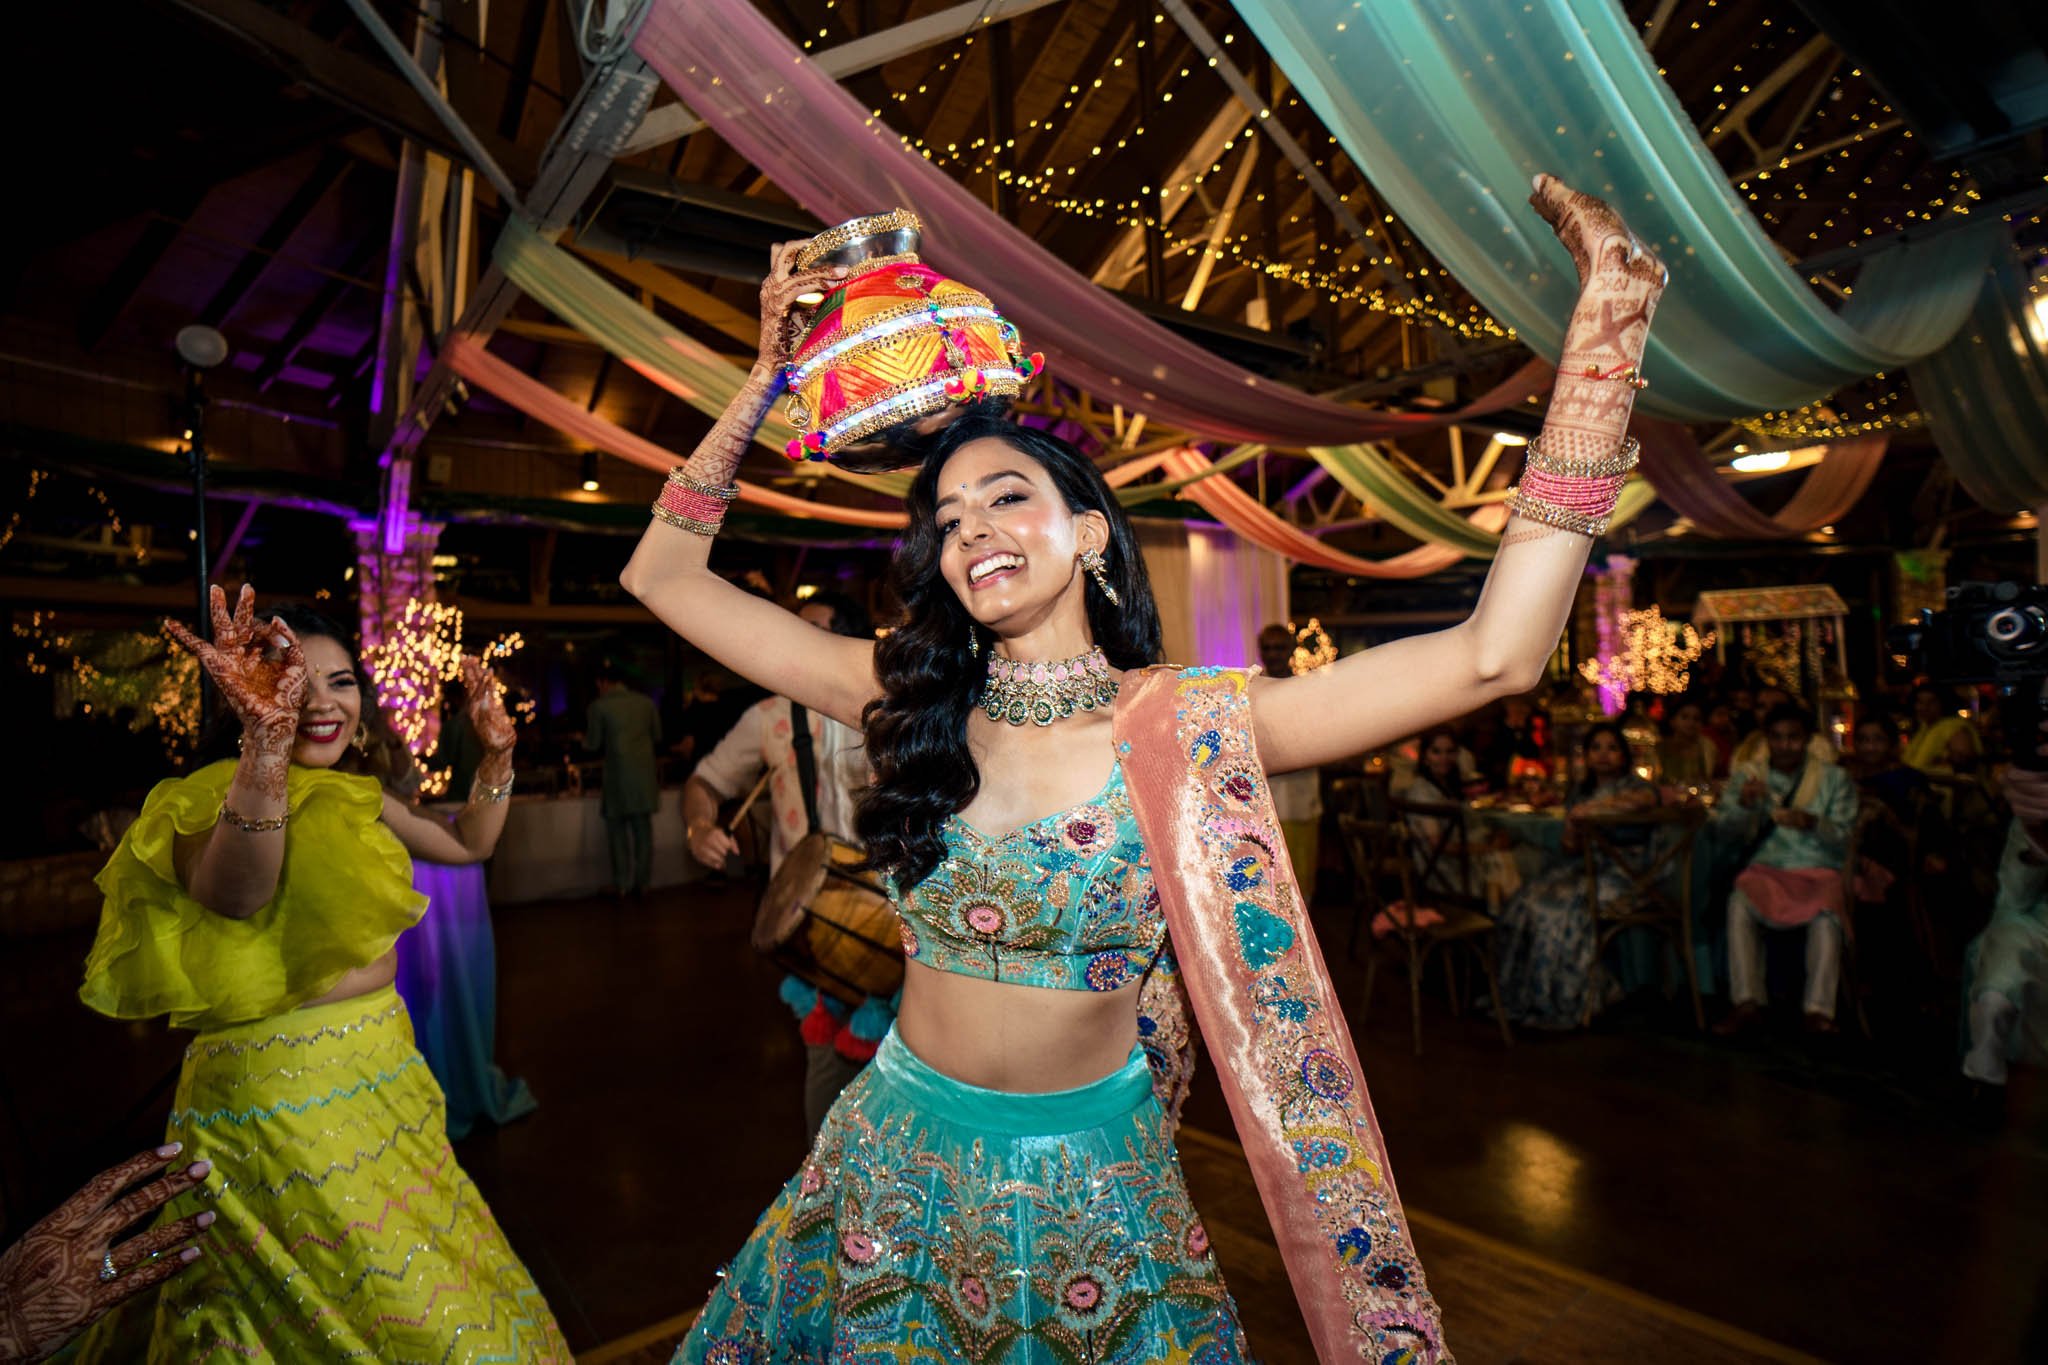 An Indian bride dancing at a Biltmore Estate wedding reception.